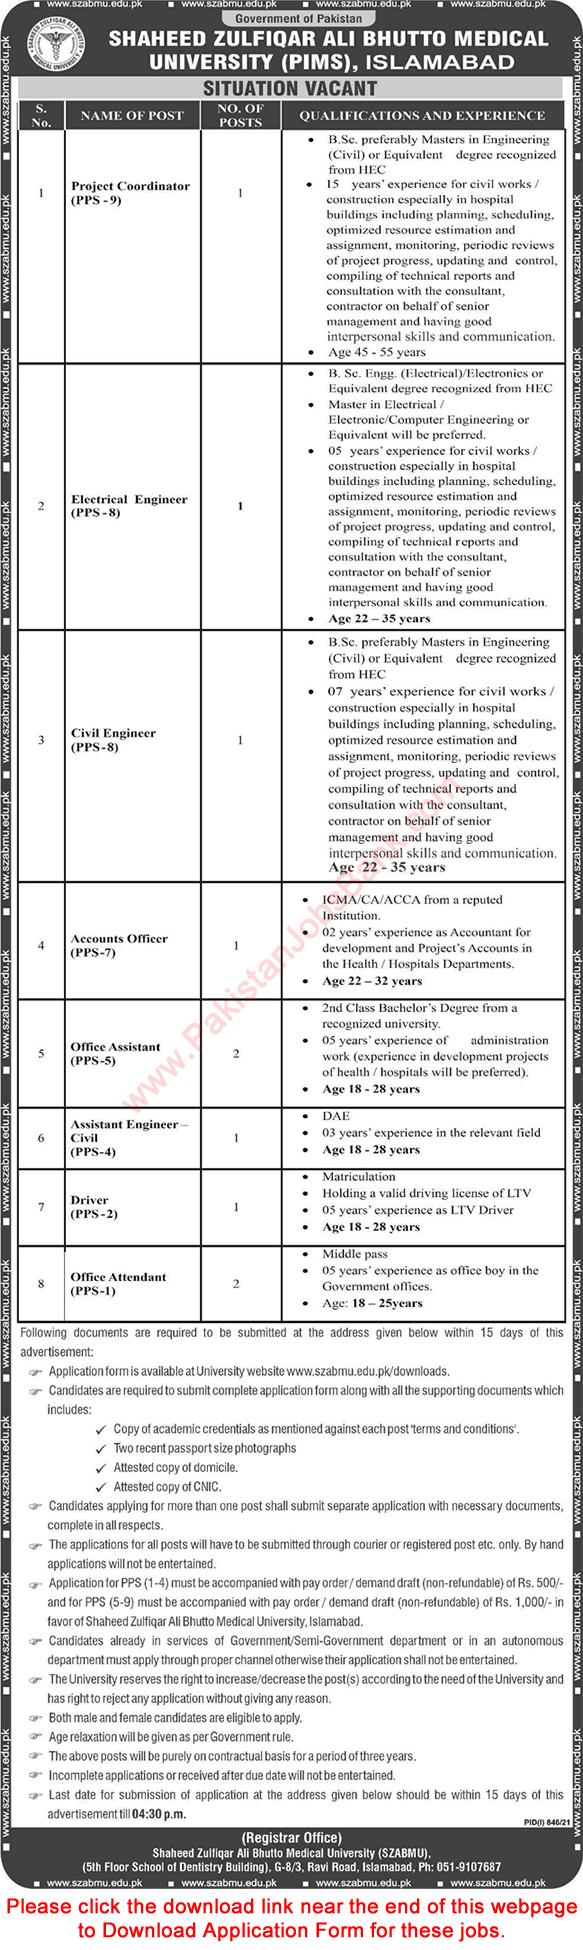 Shaheed Zulfiqar Ali Bhutto Medical University Islamabad Jobs 2021 August SZABMU Application Form PIMS Hospital Latest